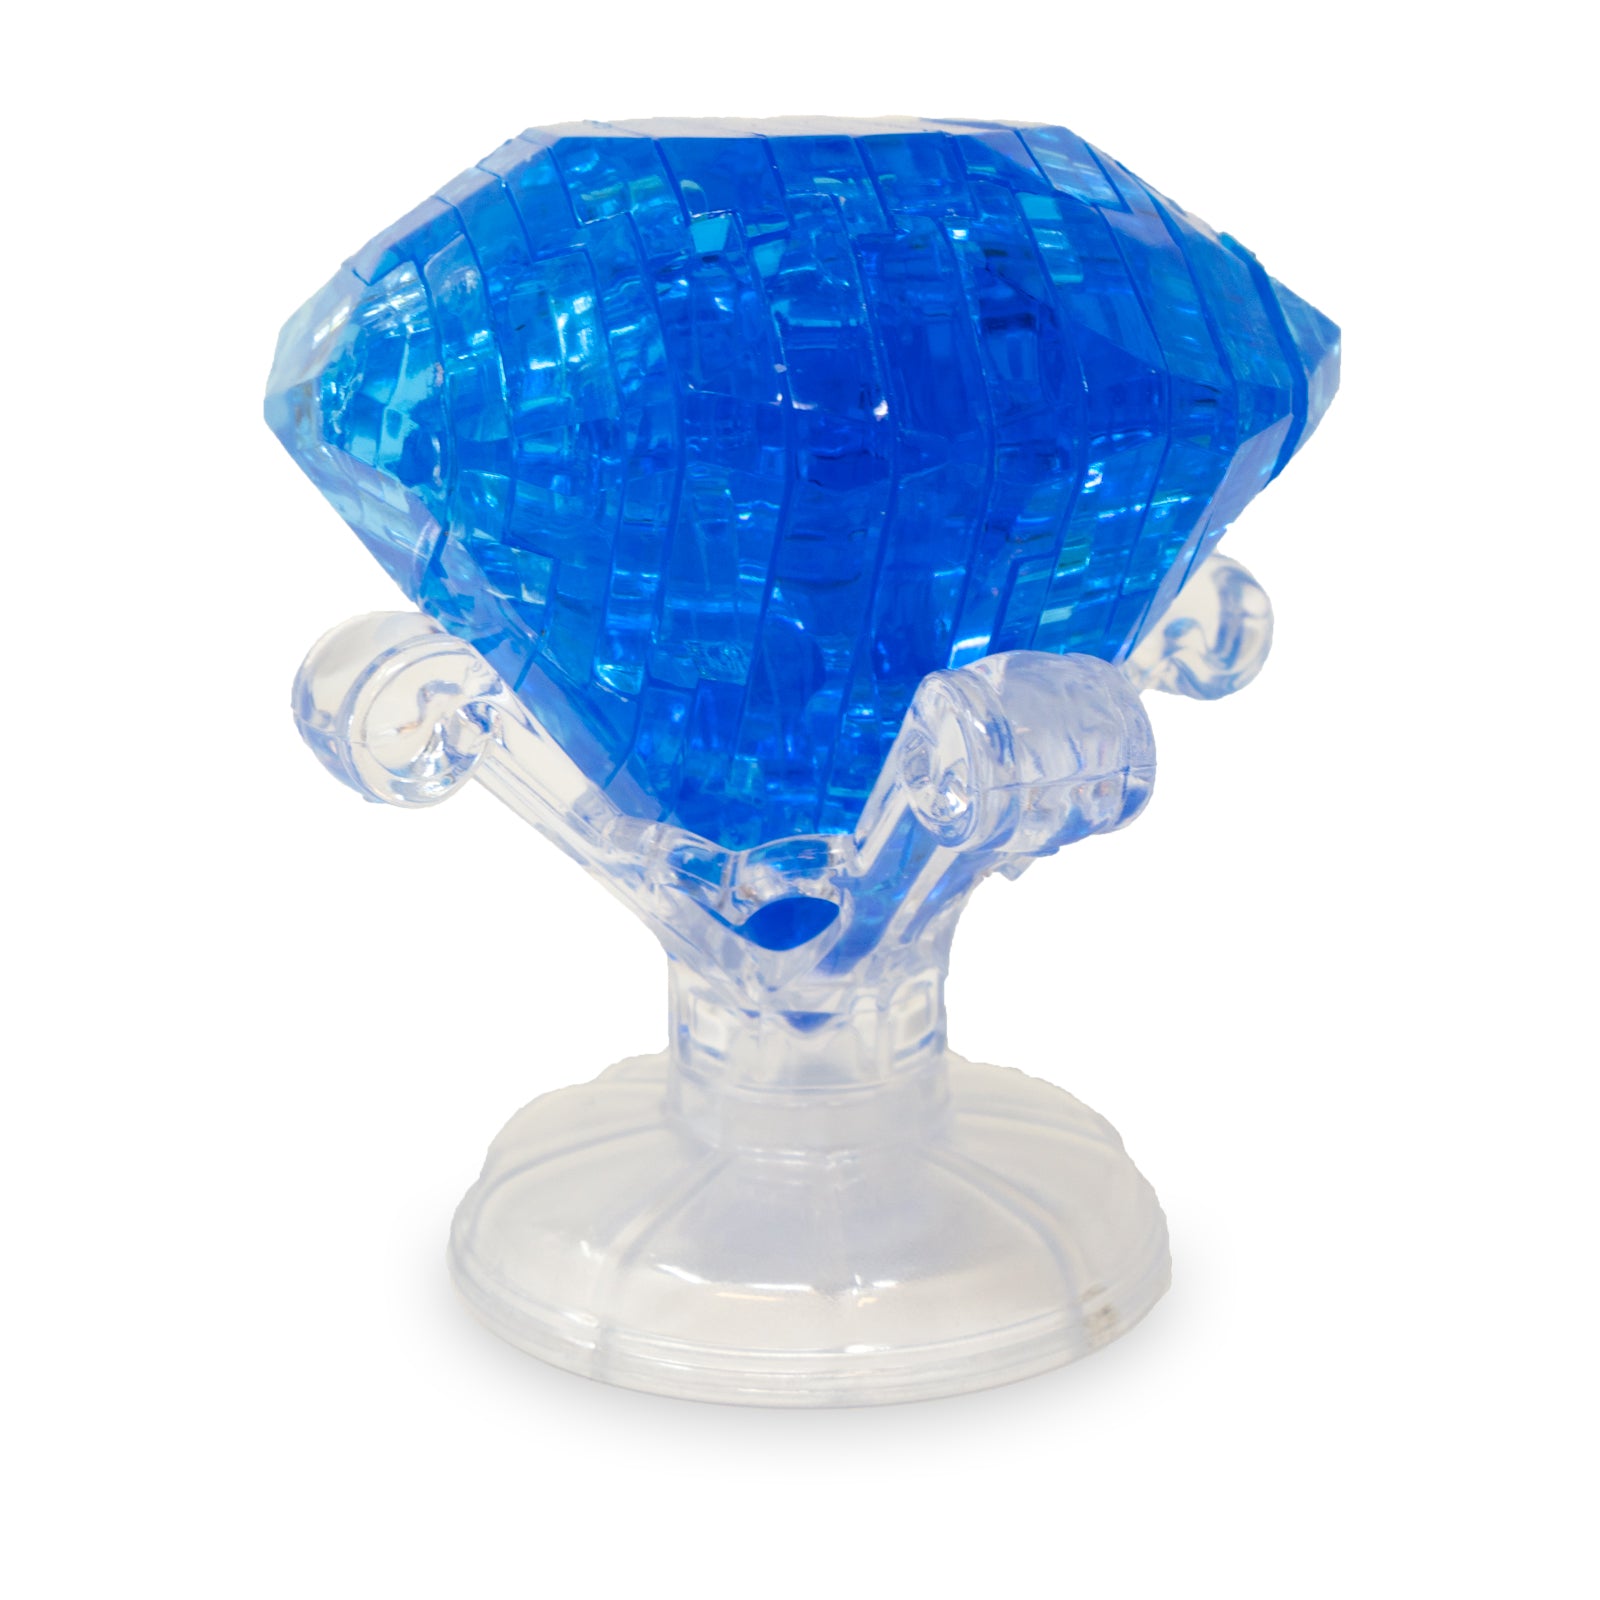 AreYouGame.com 3D Crystal Puzzle - Diamond: 43 Pieces 